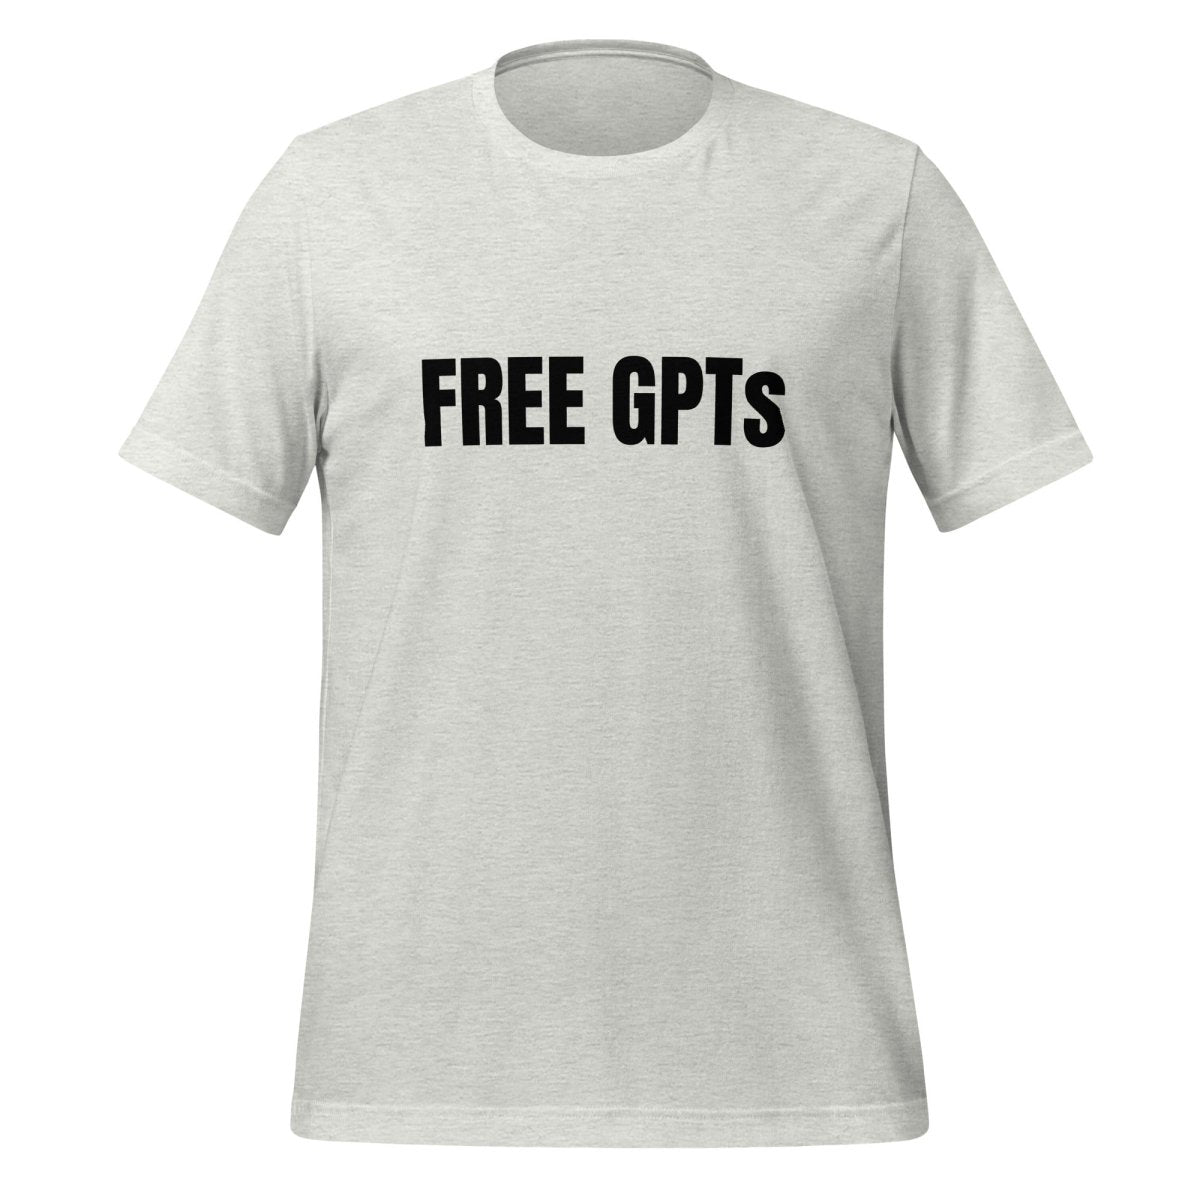 FREE GPTs T - Shirt (unisex) - Ash - AI Store